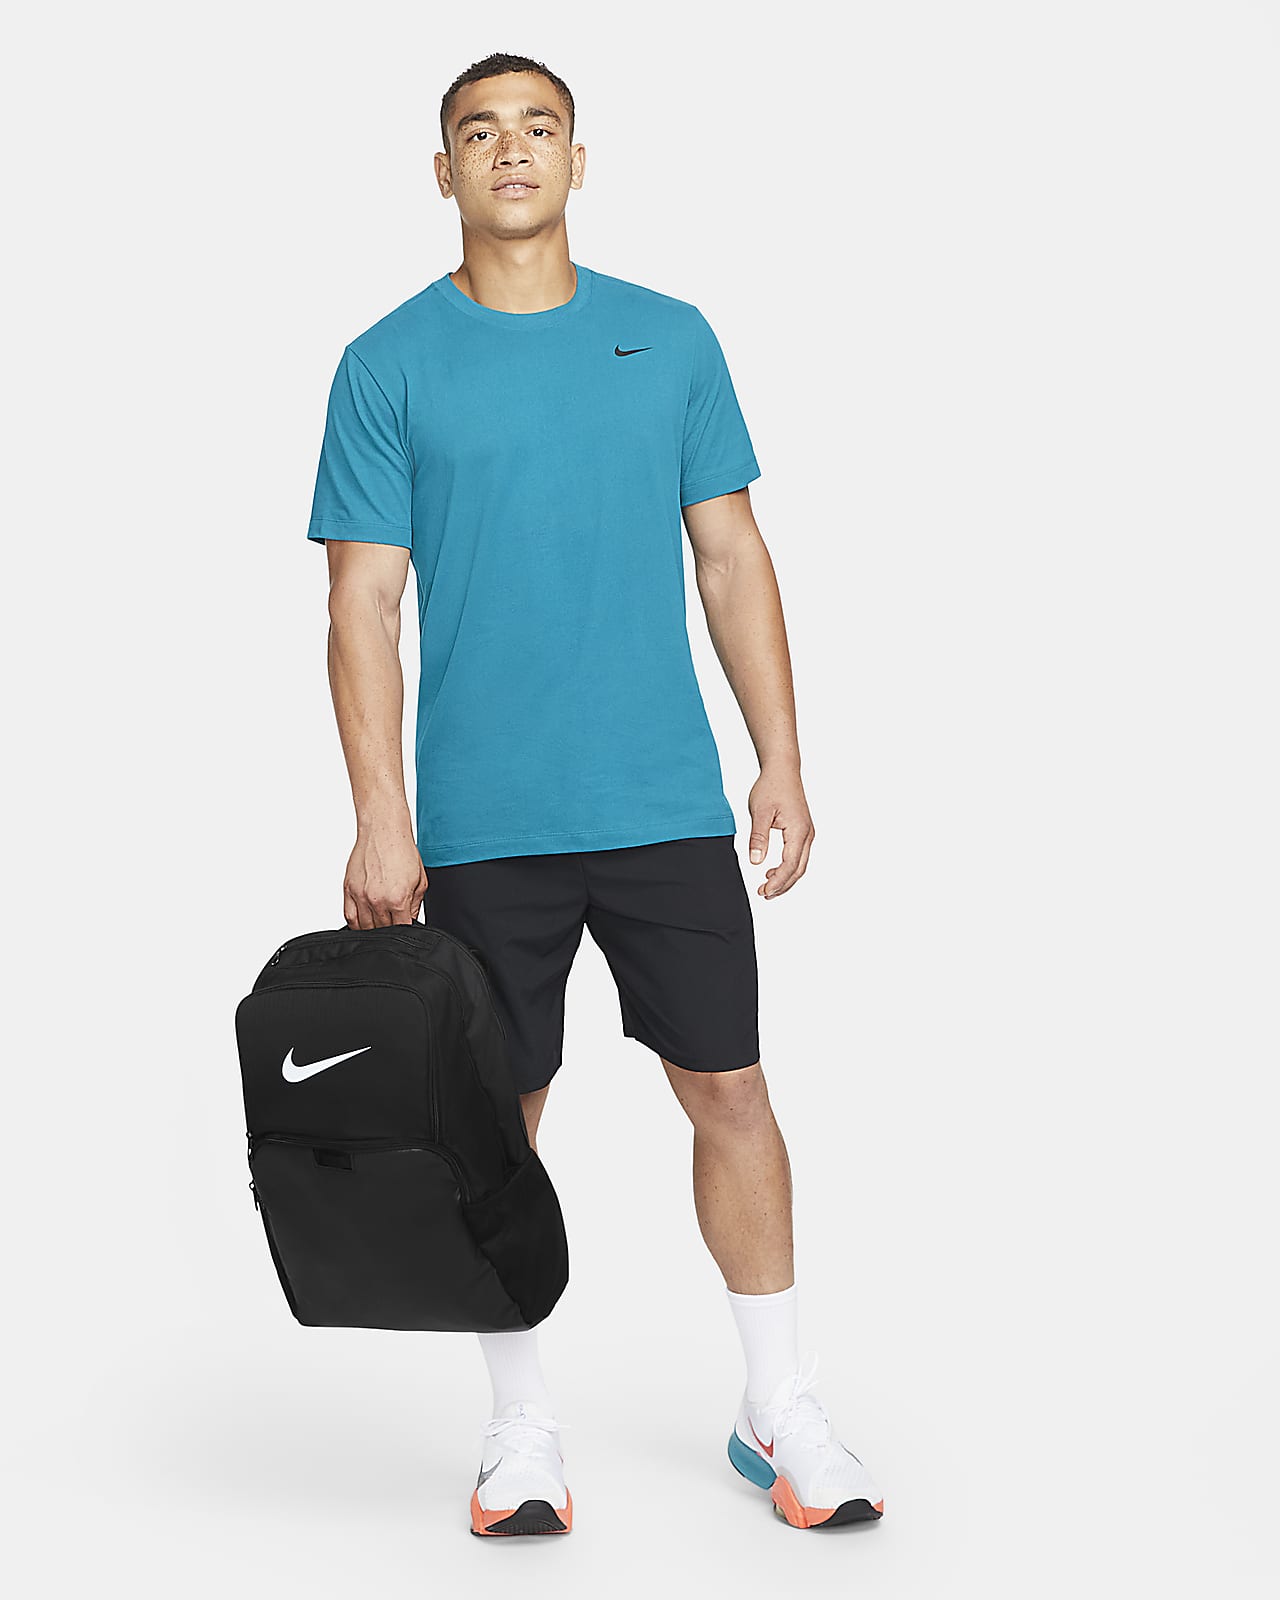 Buy Nike Brasilia XS (BA5961) from £31.98 (Today) – Best Deals on